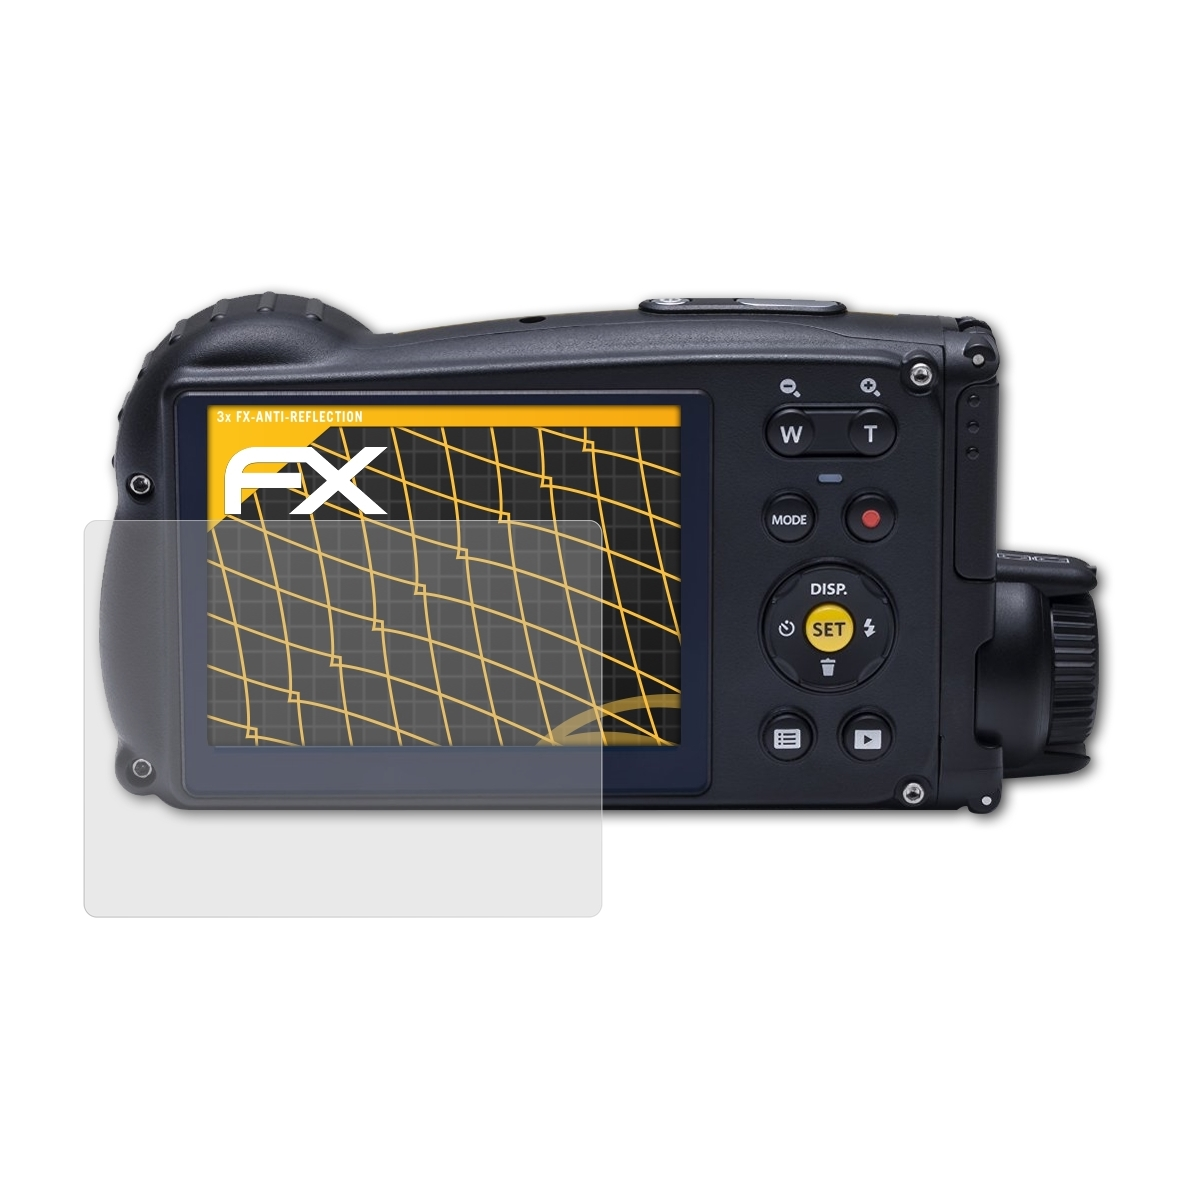 ATFOLIX 3x FX-Antireflex Displayschutz(für Kodak WP1) PixPro